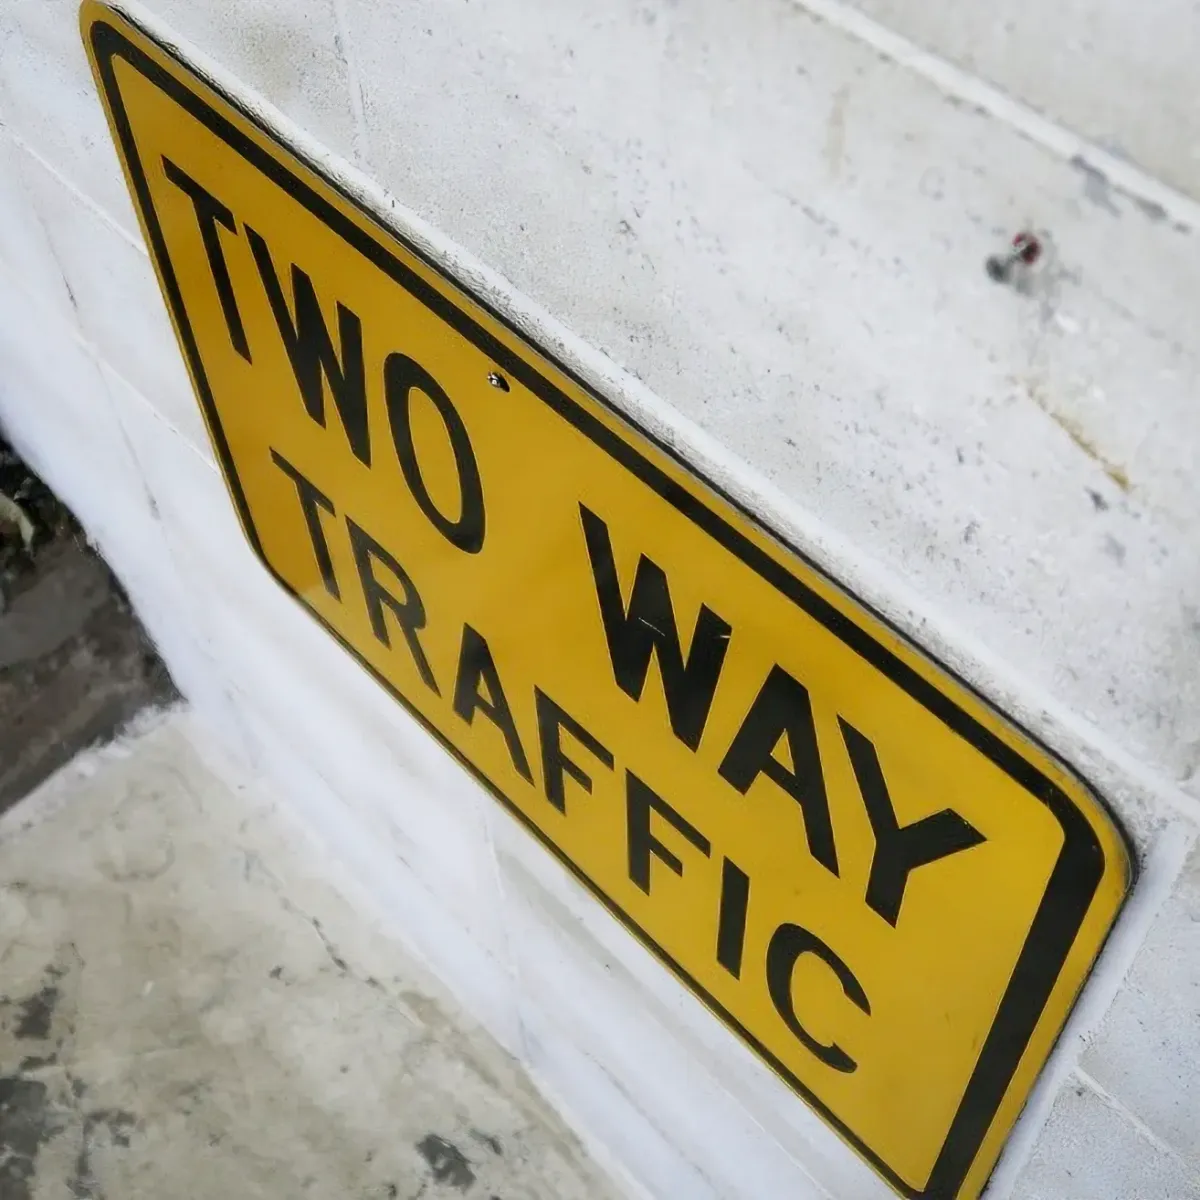 TWO WAY TRAFFIC ビンテージ ロードサイン